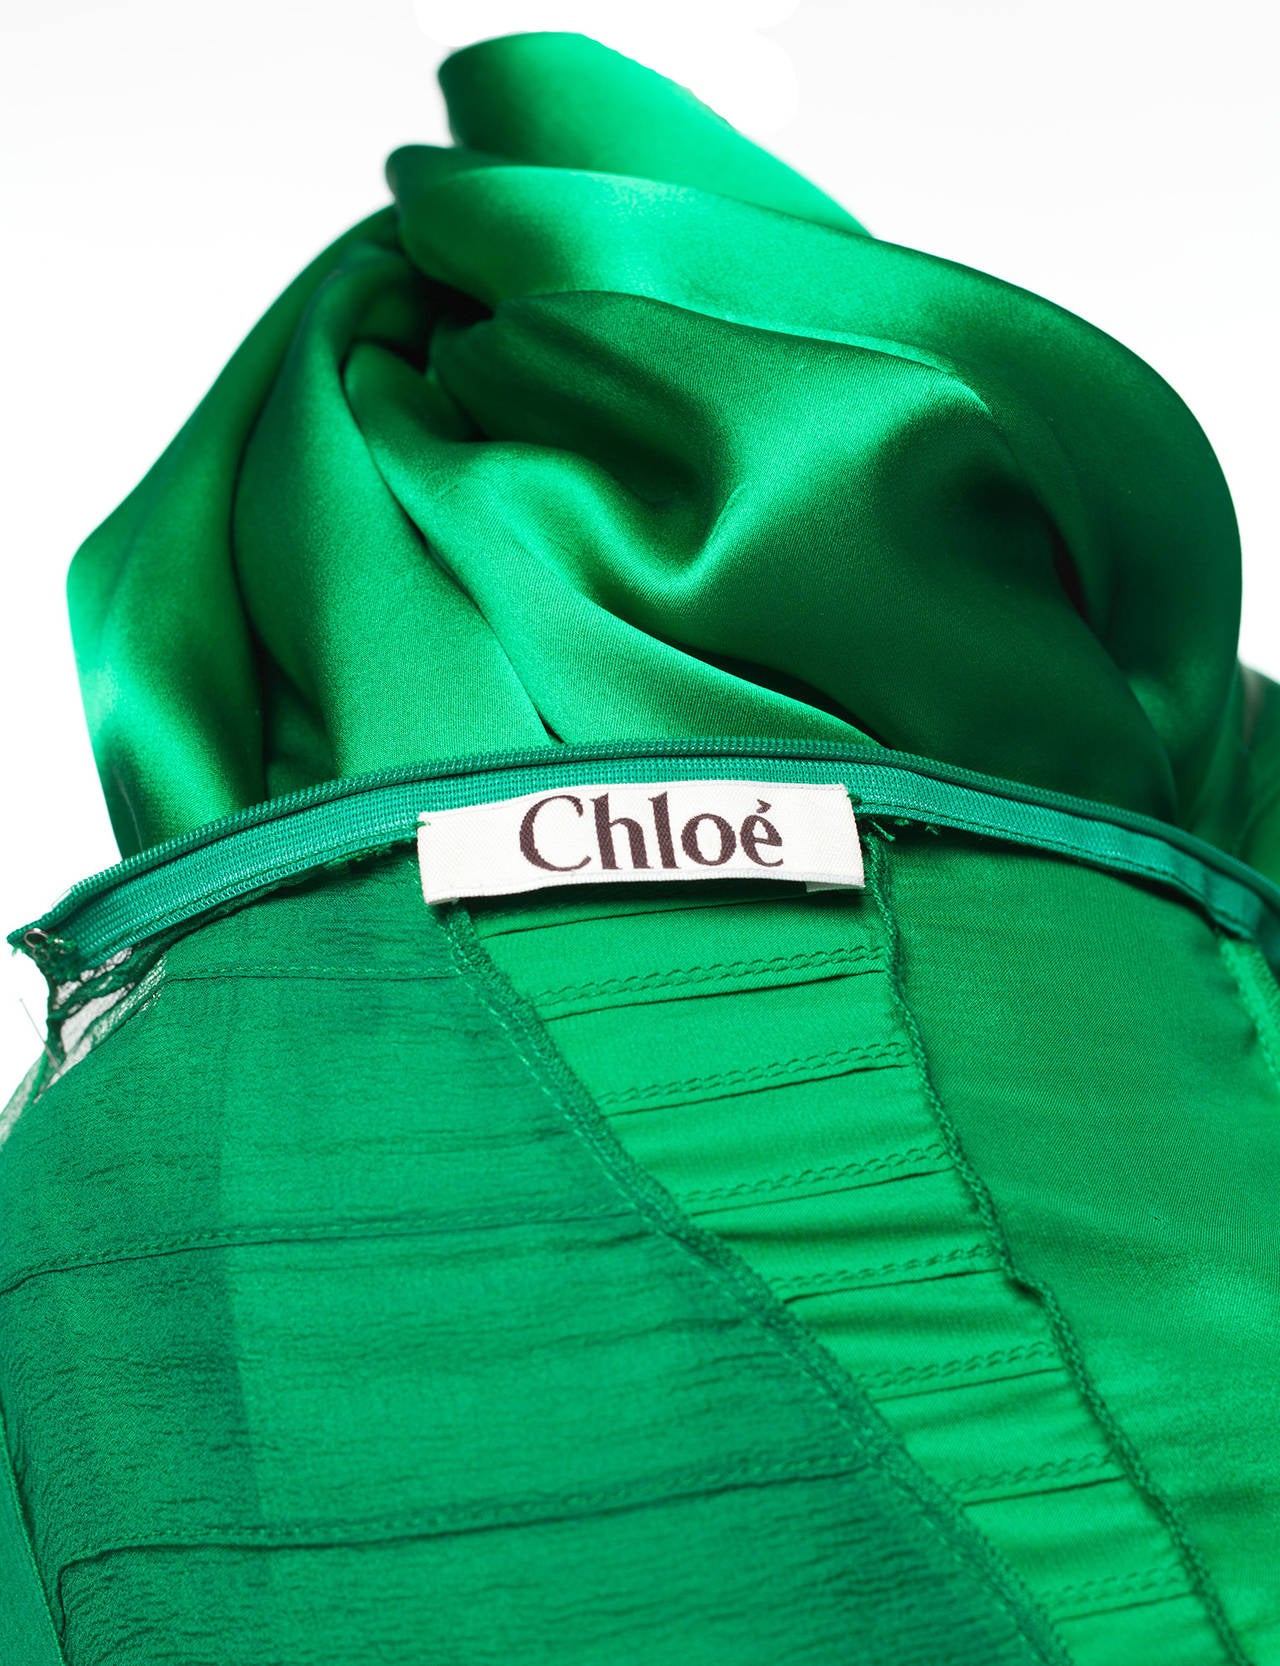 Chloe By Phoebe Philo green silk 1920's style evening dress, Sz. S 4